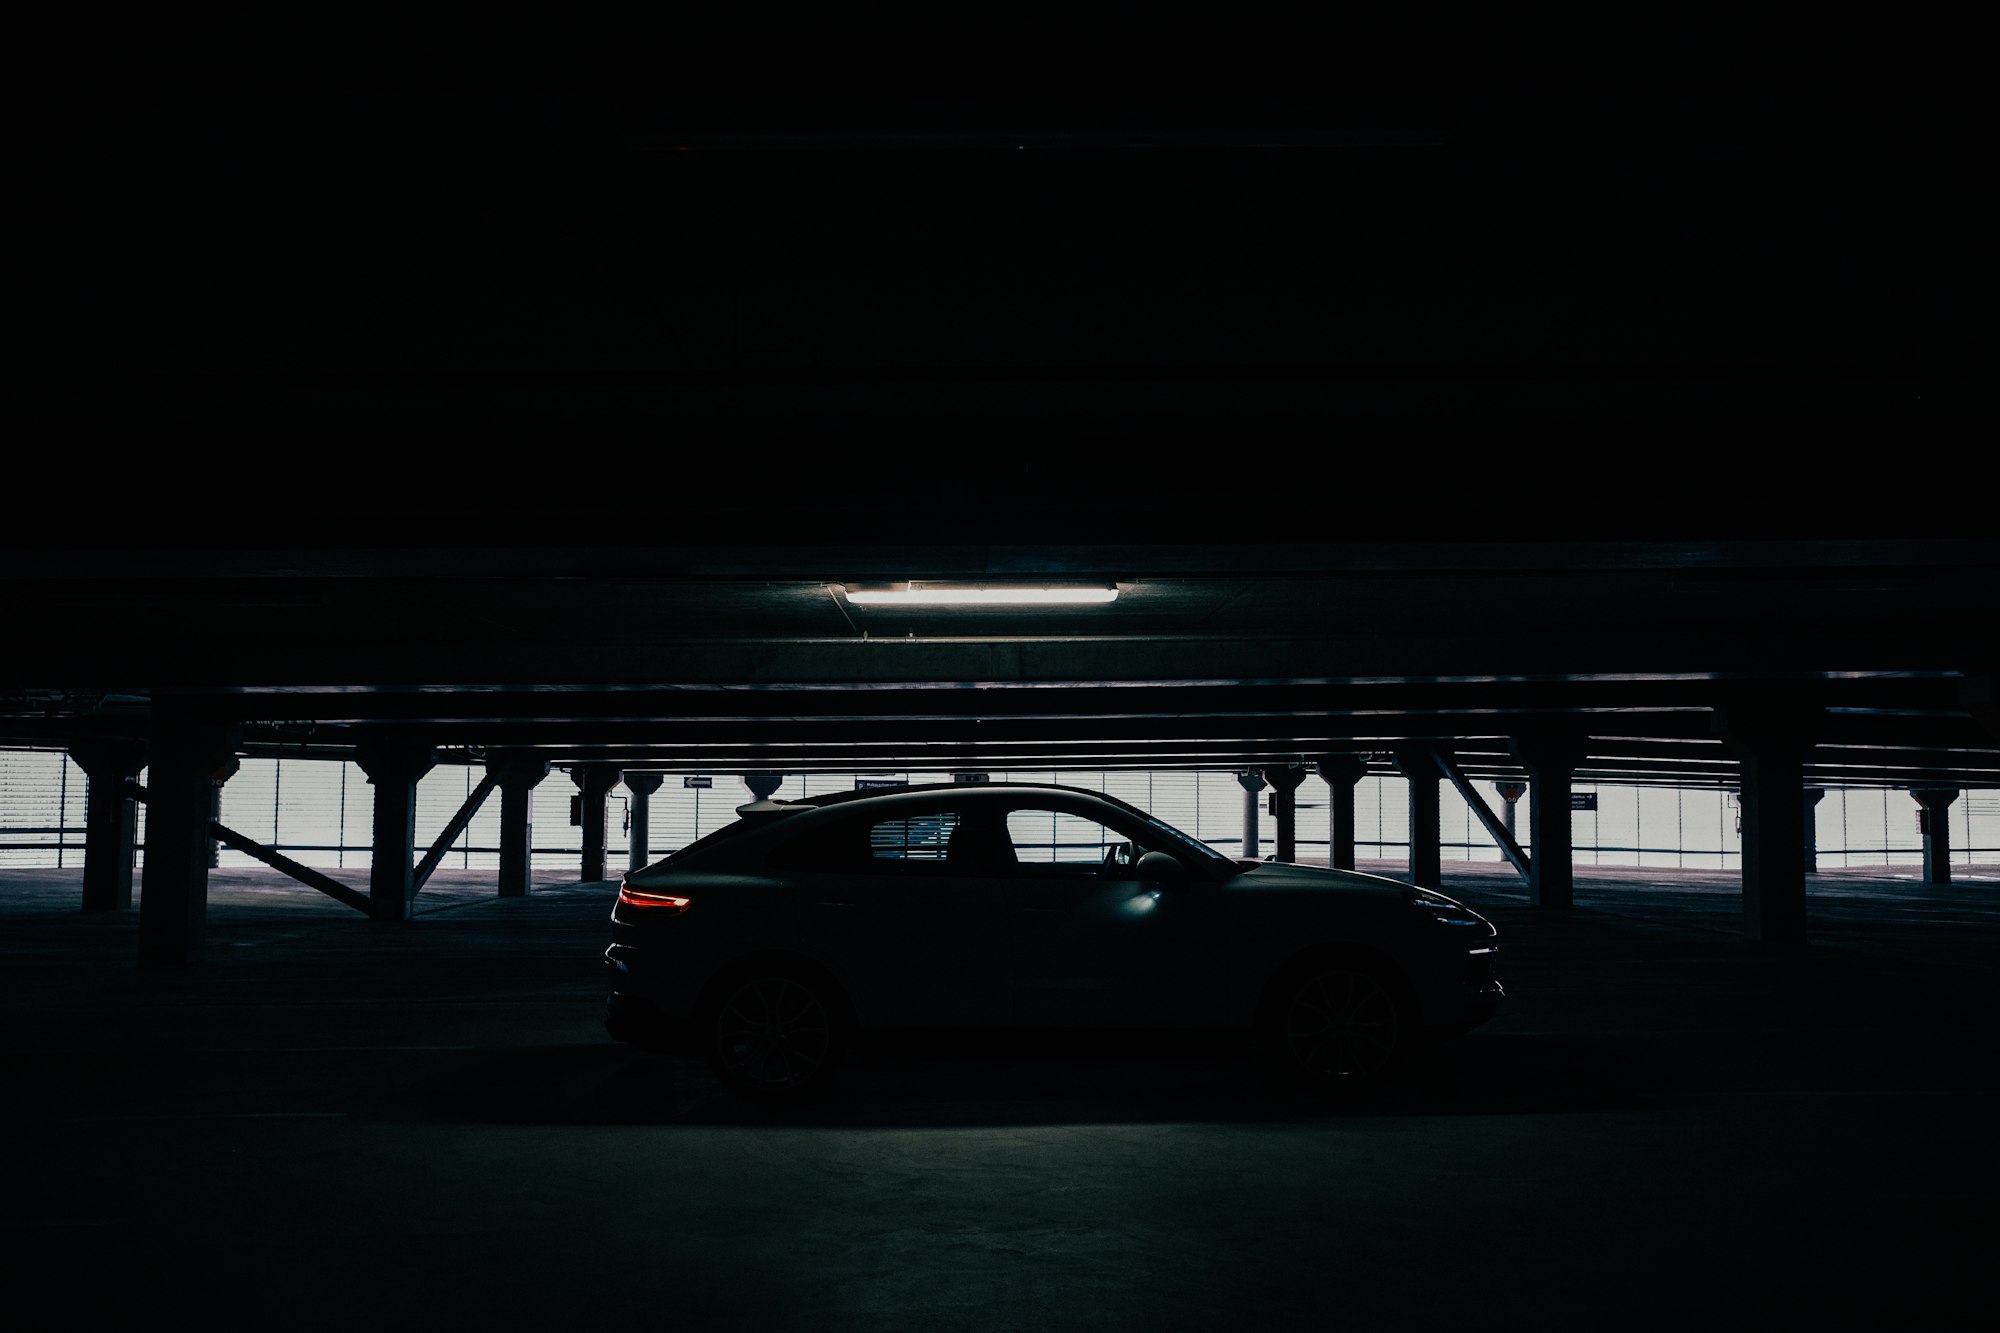 Sports car in parking garage. Cinematic